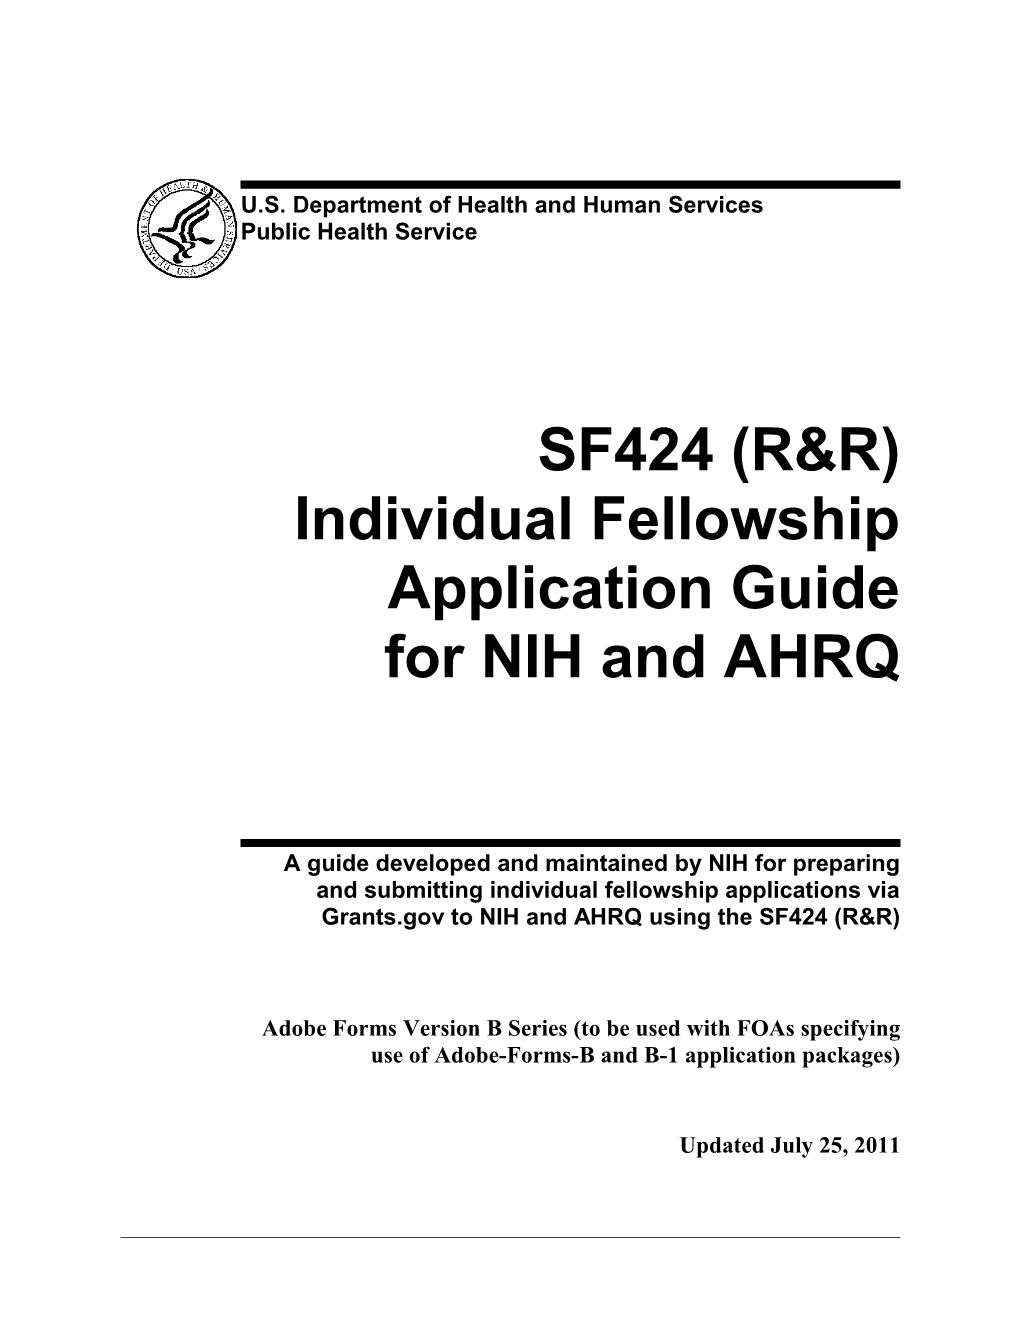 NIH SF424 R&R Individual Fellowship Application Guide